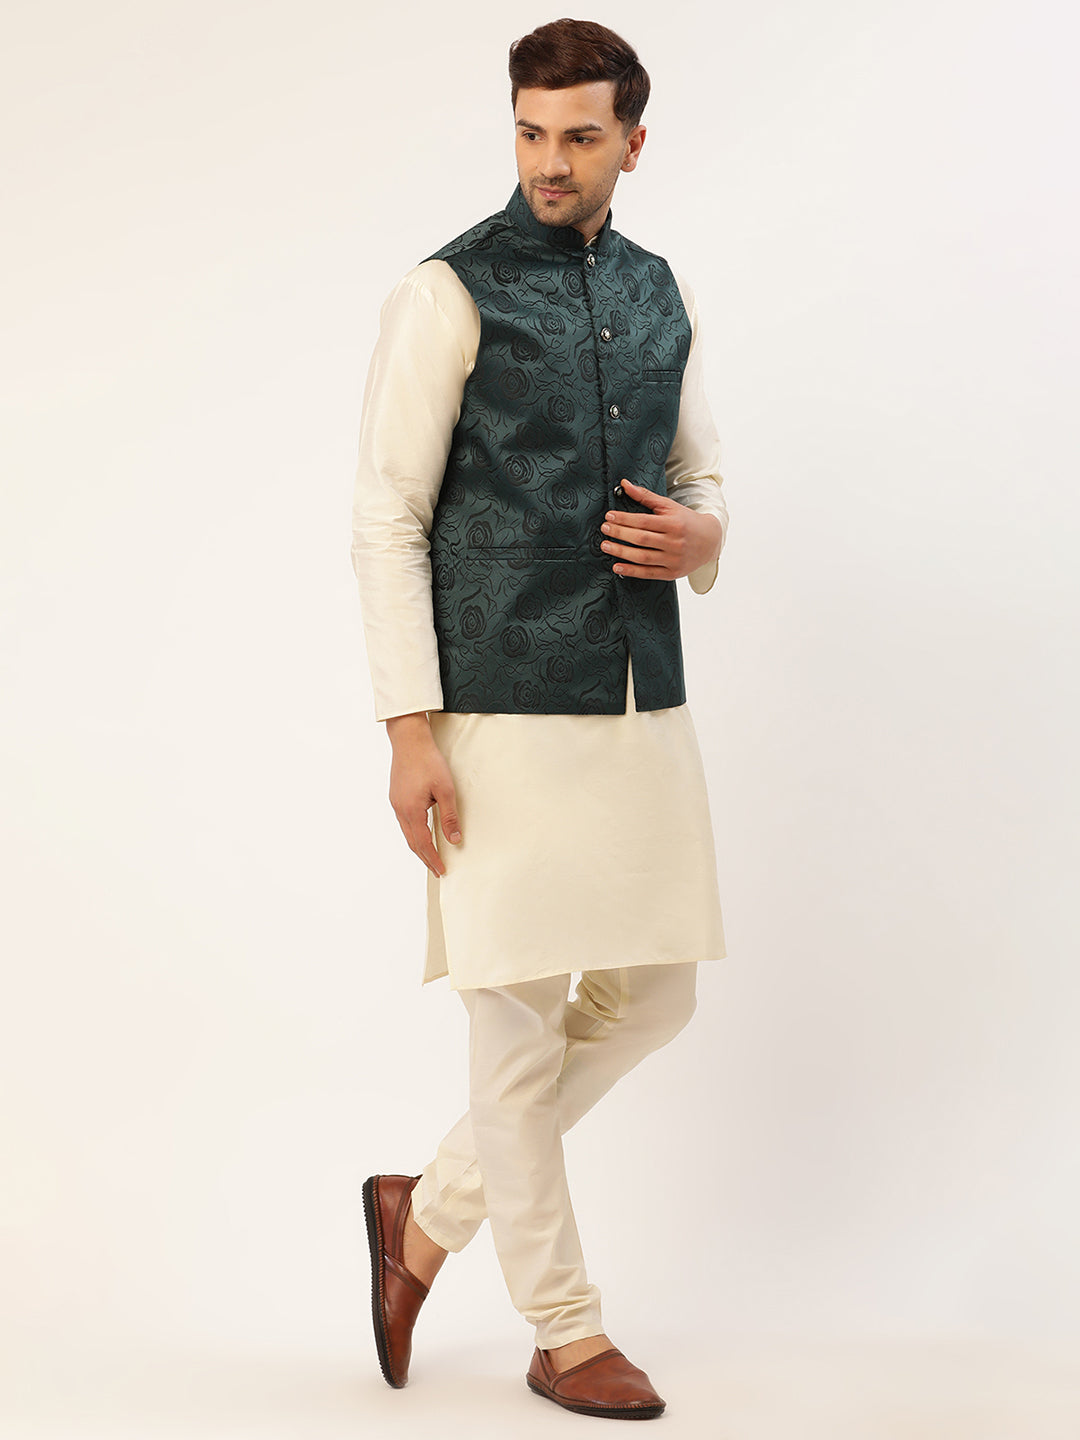 Men's Solid Kurta Pyjama With Teal Floral Embroidered Nehru Jacket